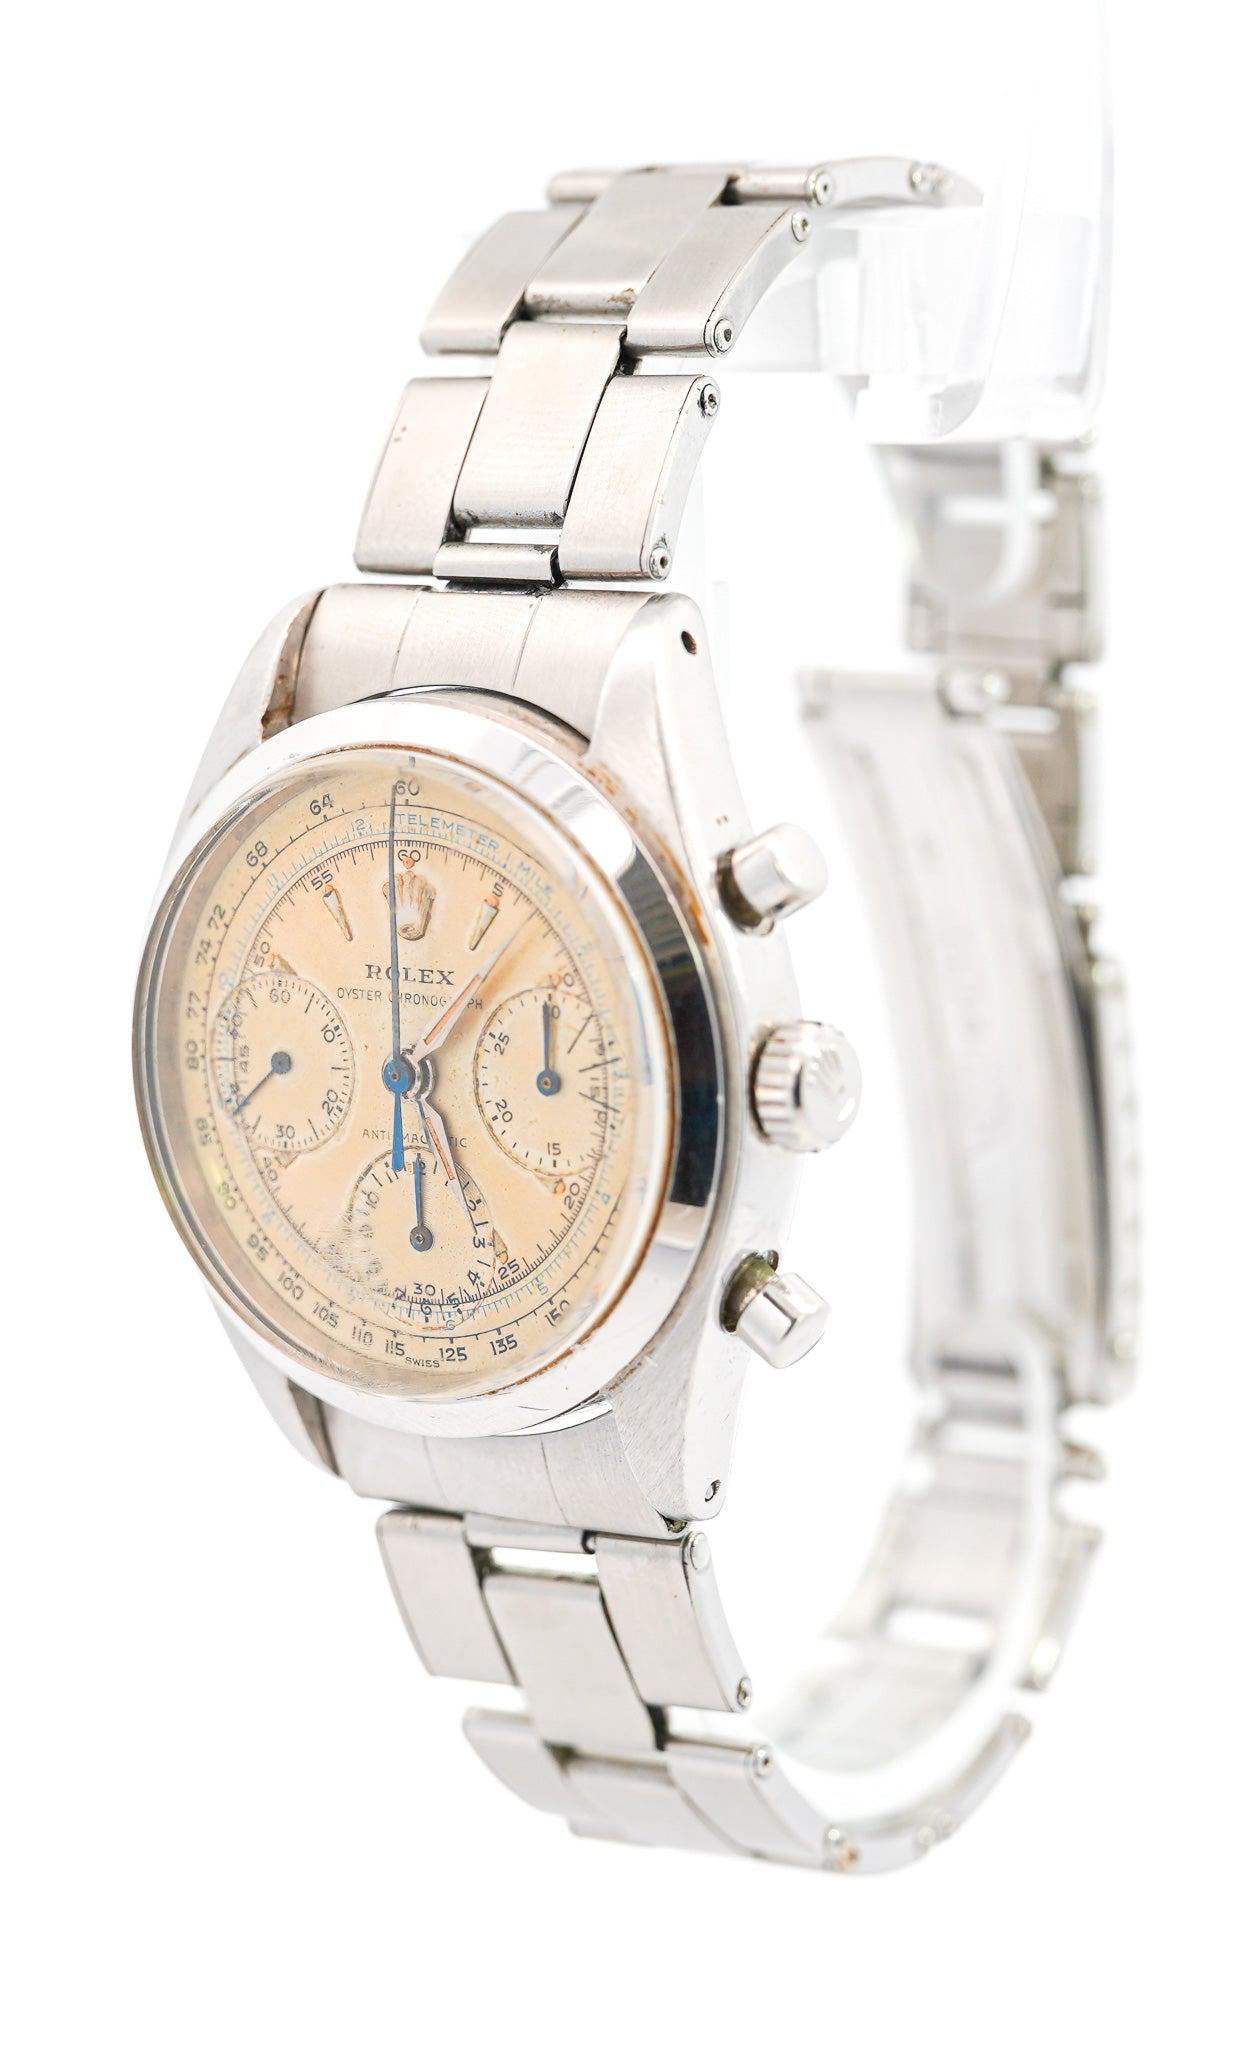 Rolex-6234-Vintage-Pre-Daytona-Oyster-Chronograph-36MM-Manual-Wind-Watch-Watches-2.jpg